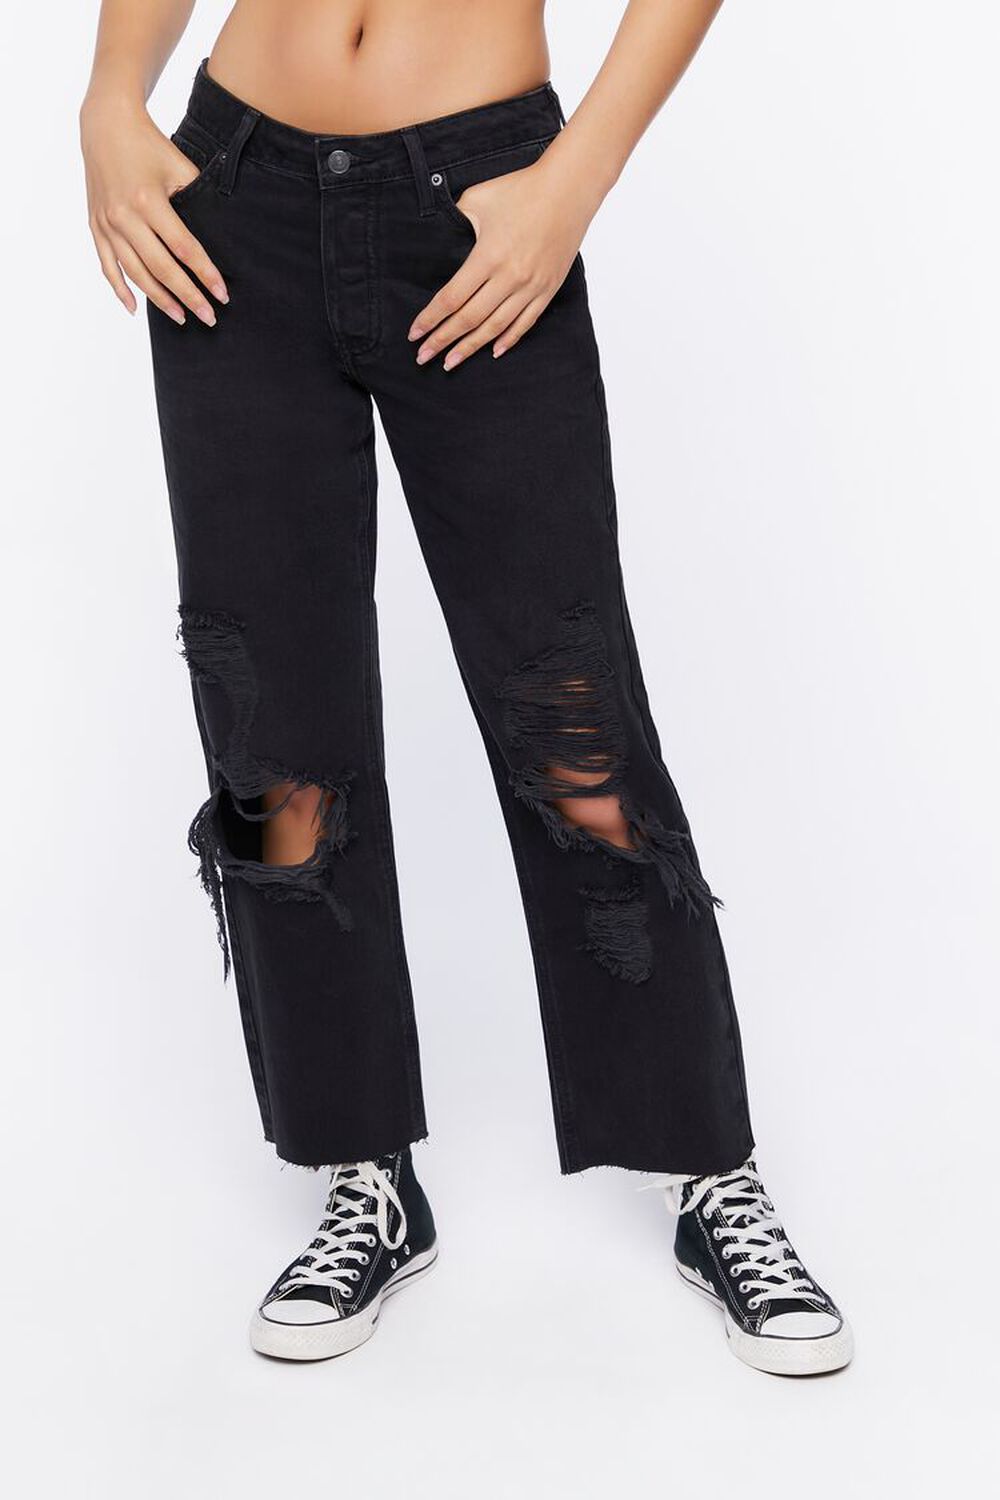 BLACK Distressed Boyfriend Jeans, image 3